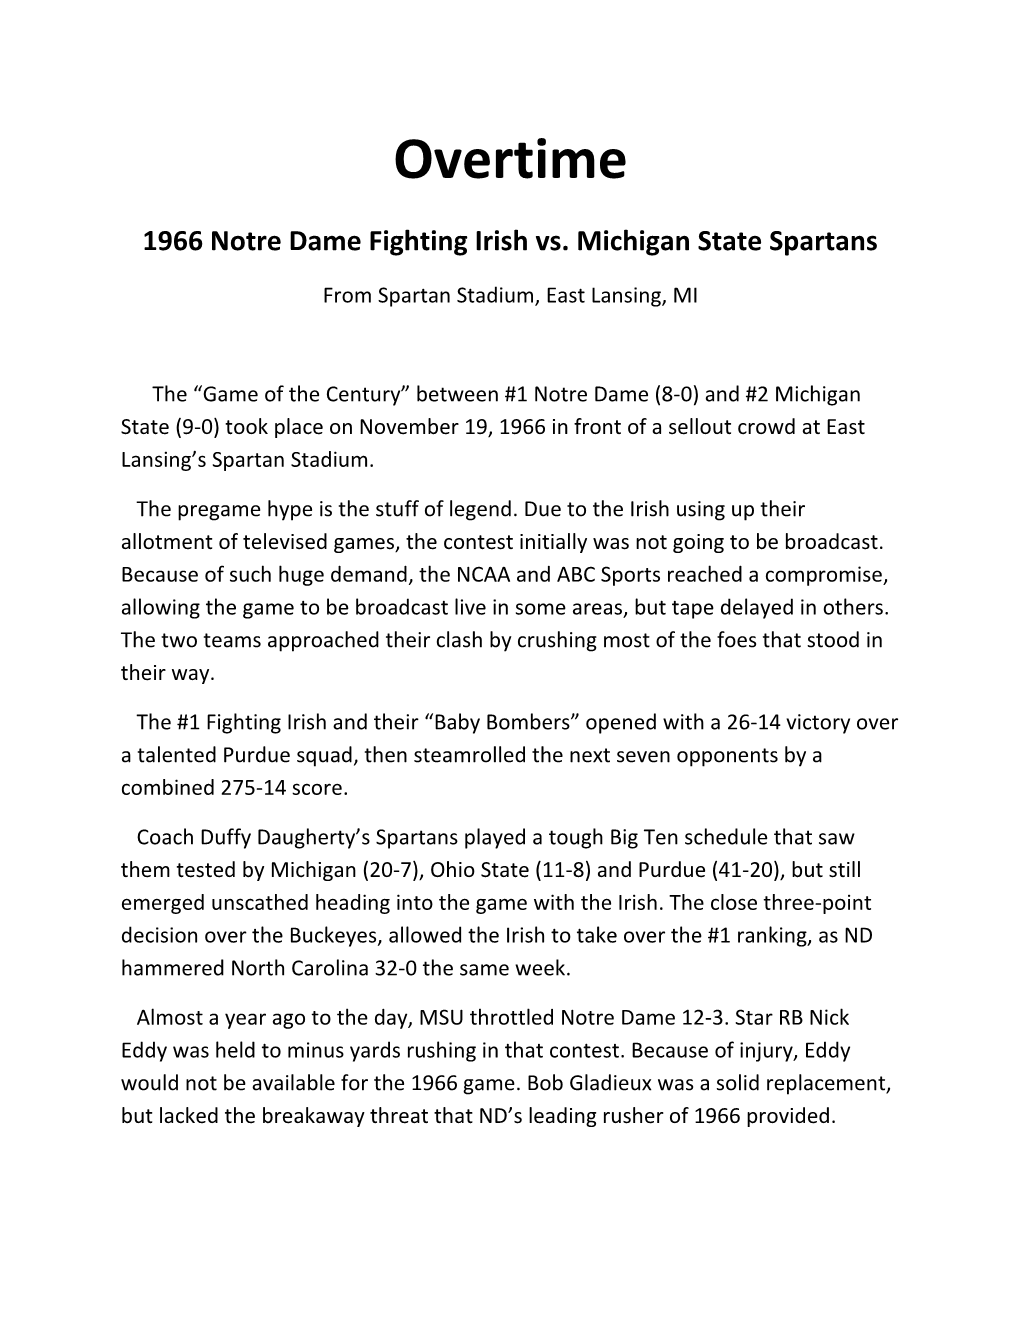 1966 Notre Dame Fighting Irish Vs. Michigan State Spartans